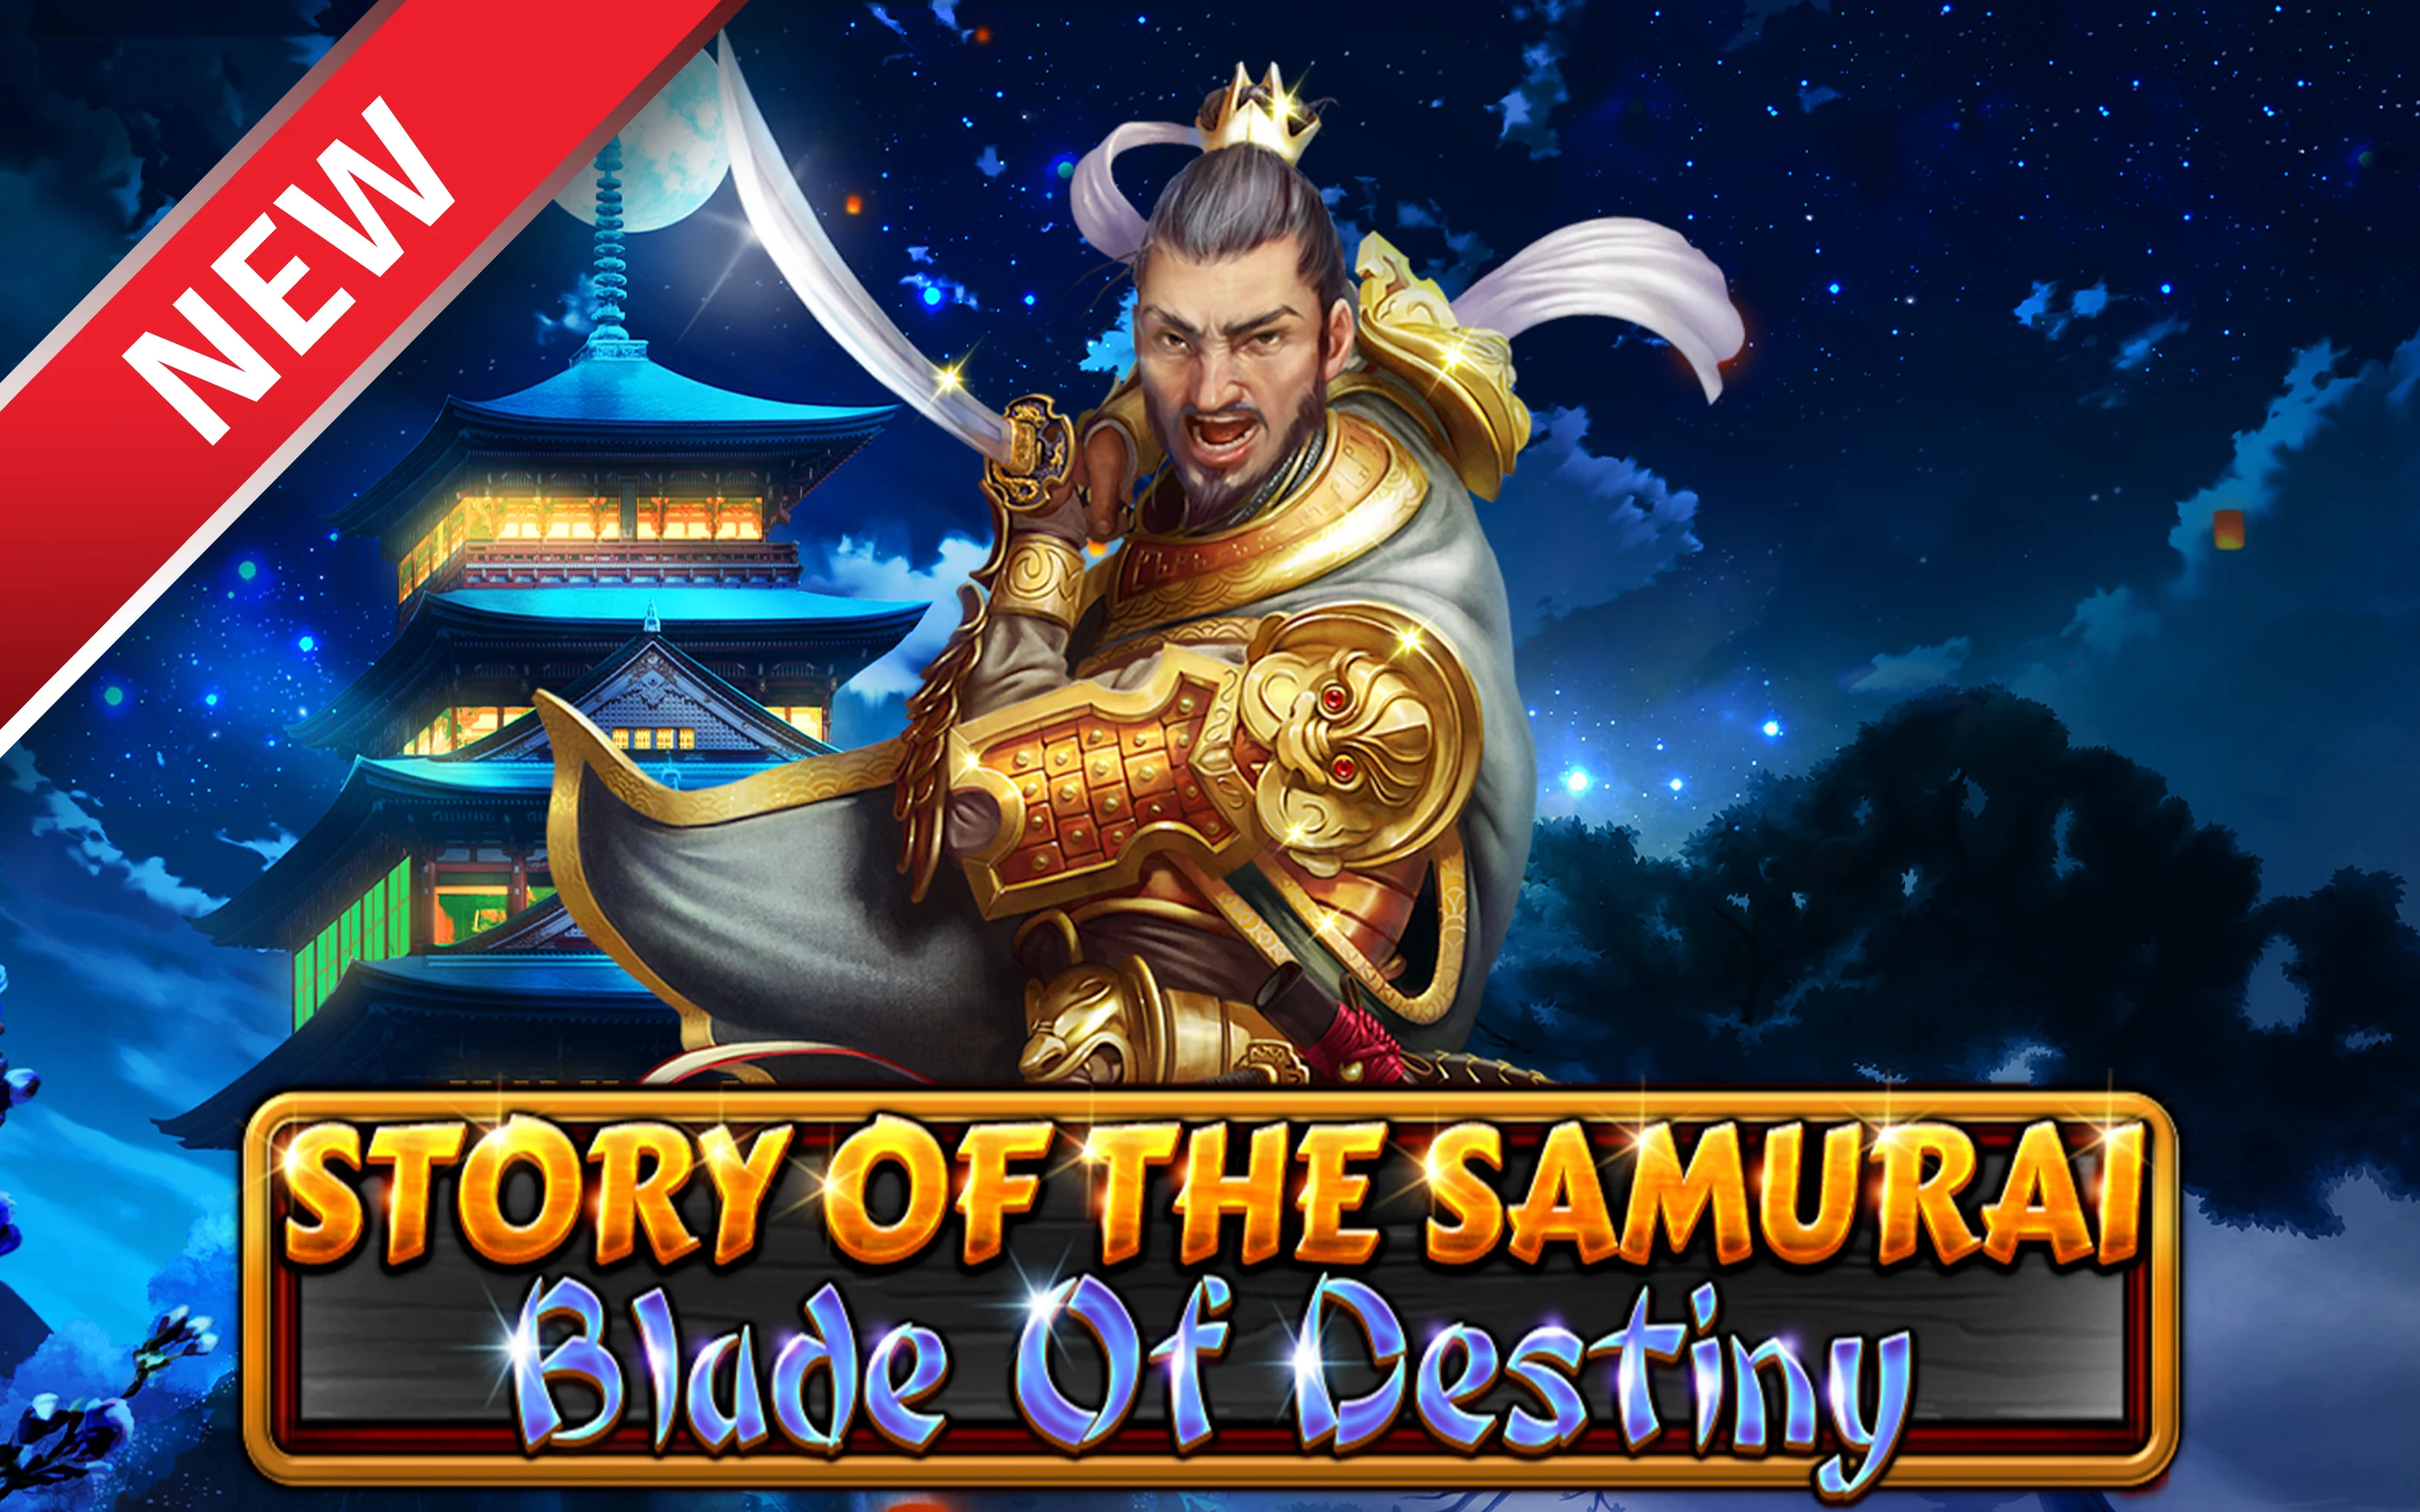 Play Story Of The Samurai - Blade Of Destiny™ on Starcasino.be online casino